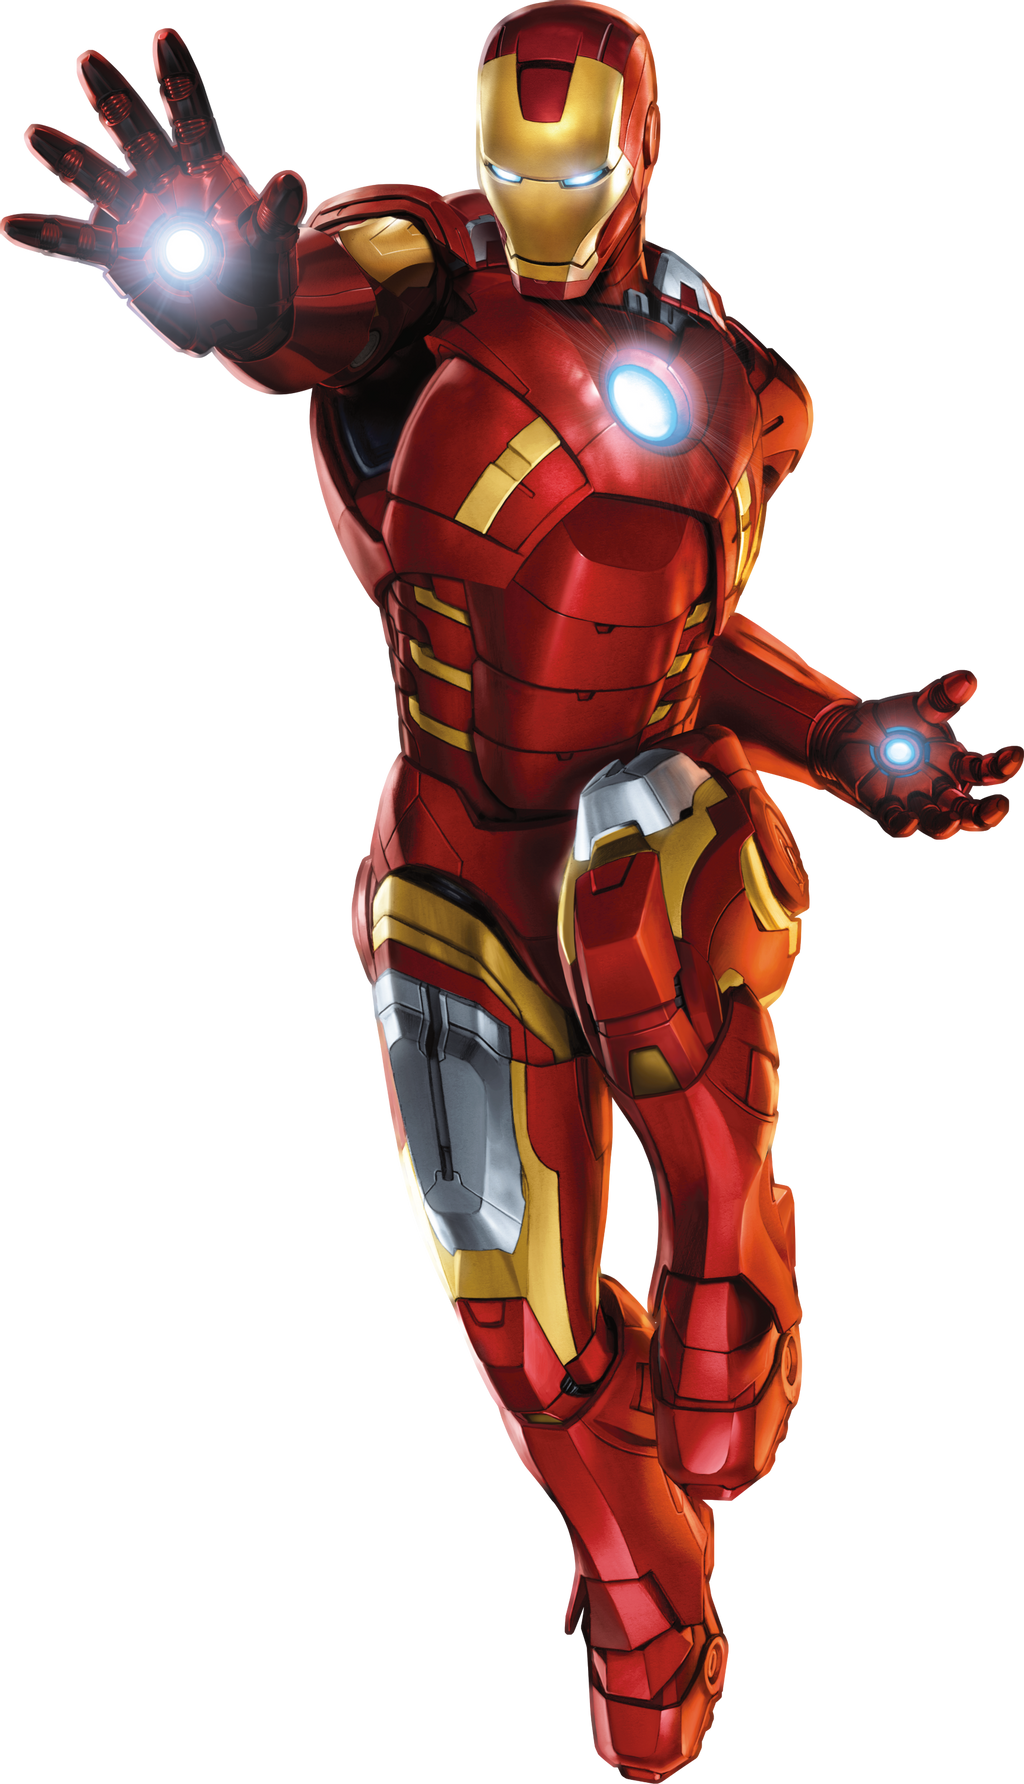 Flying Avengers Iron Man HQ Image Free PNG Image